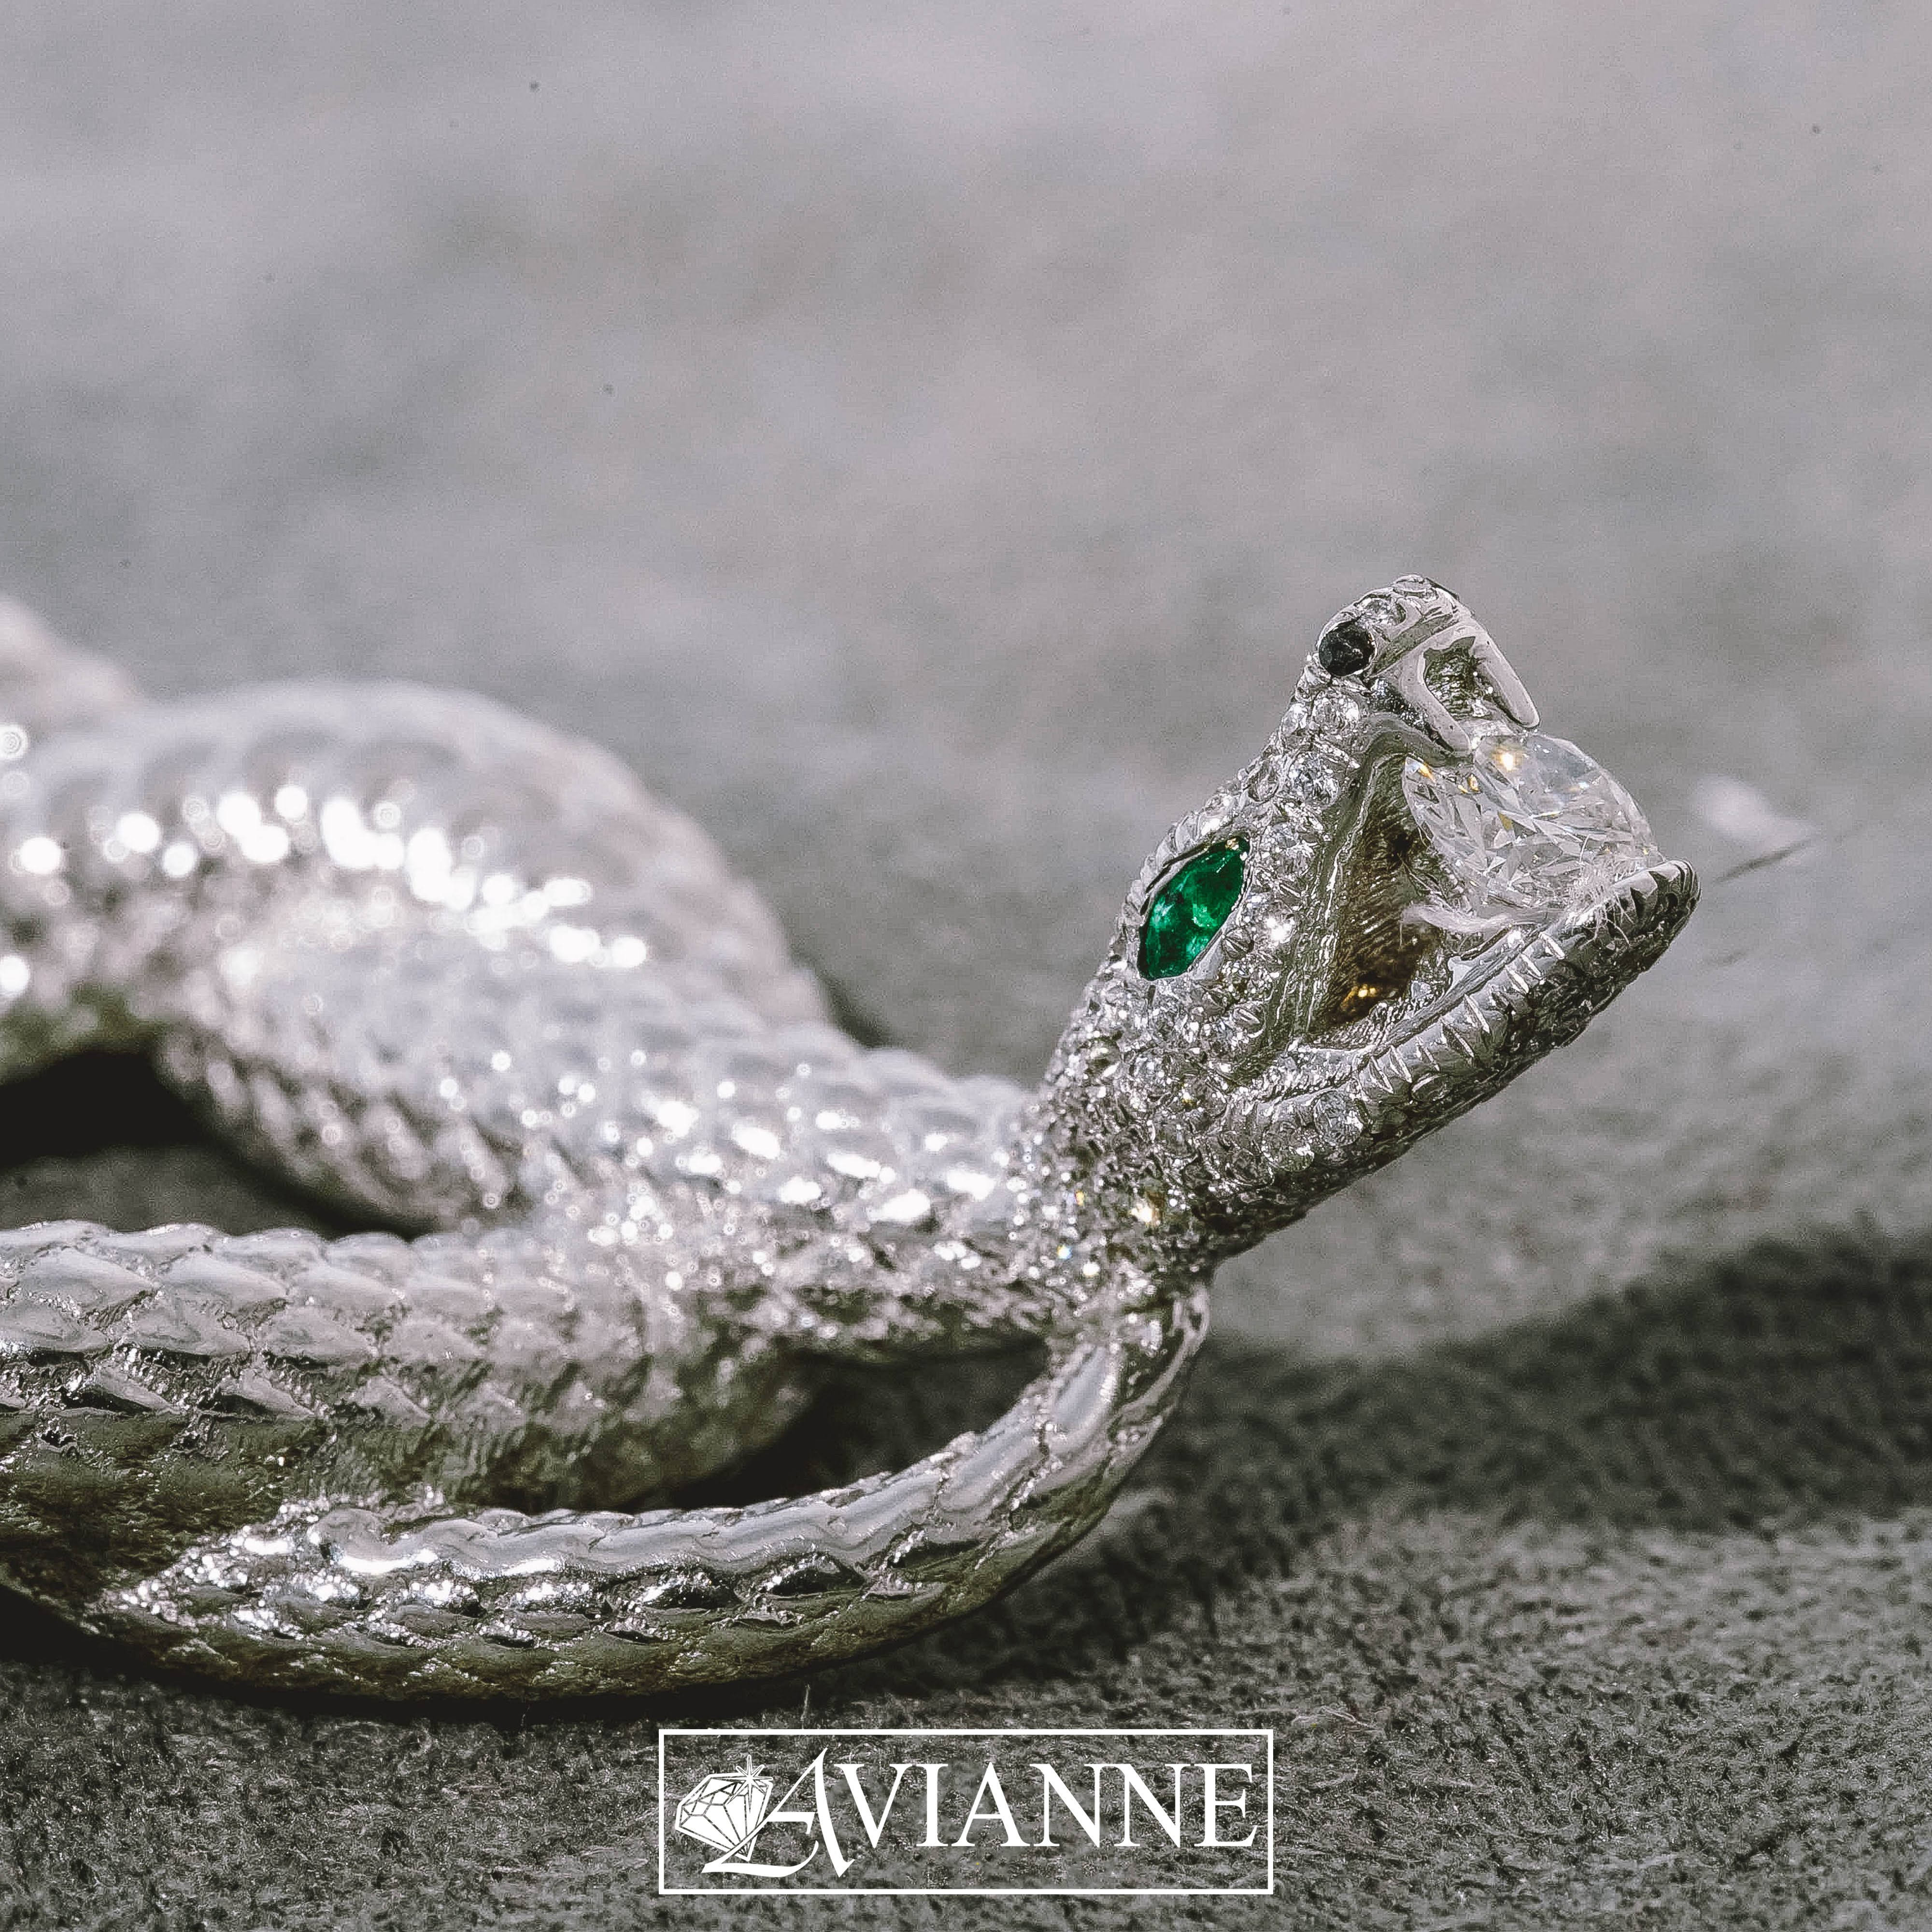 Avianne Jewelers - Avianneandco.com | Facebook